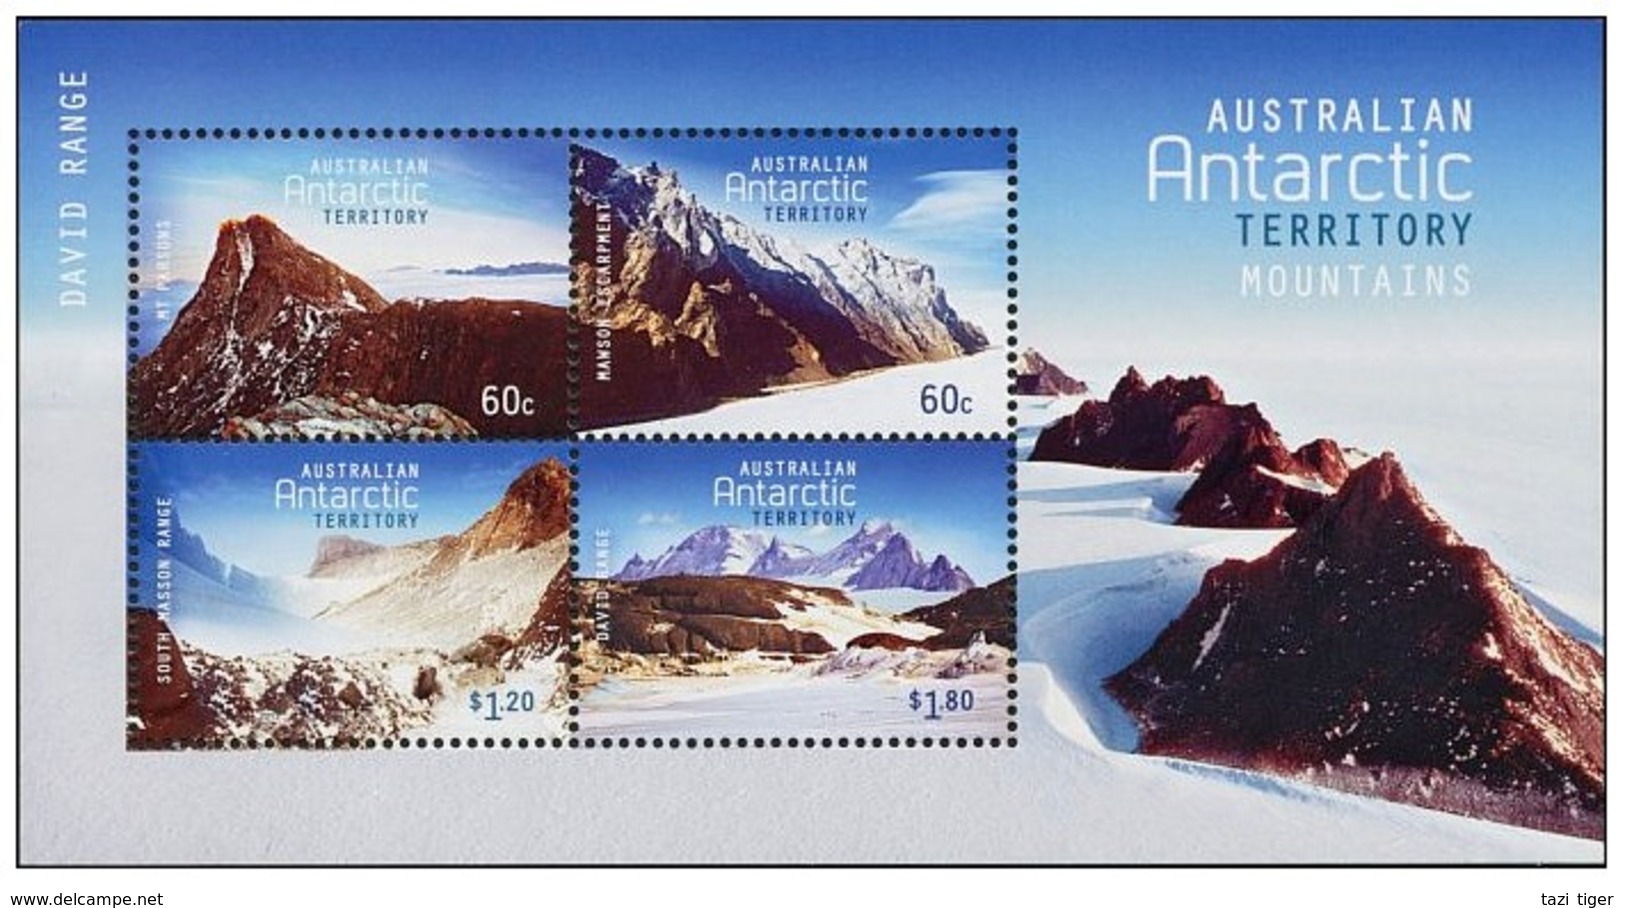 AUSTRALIAN ANTARCTIC TERRITORY (AAT) • 2013 • Australian Antarctic Mountains - Miniature Sheet • MNH (1) - Unused Stamps